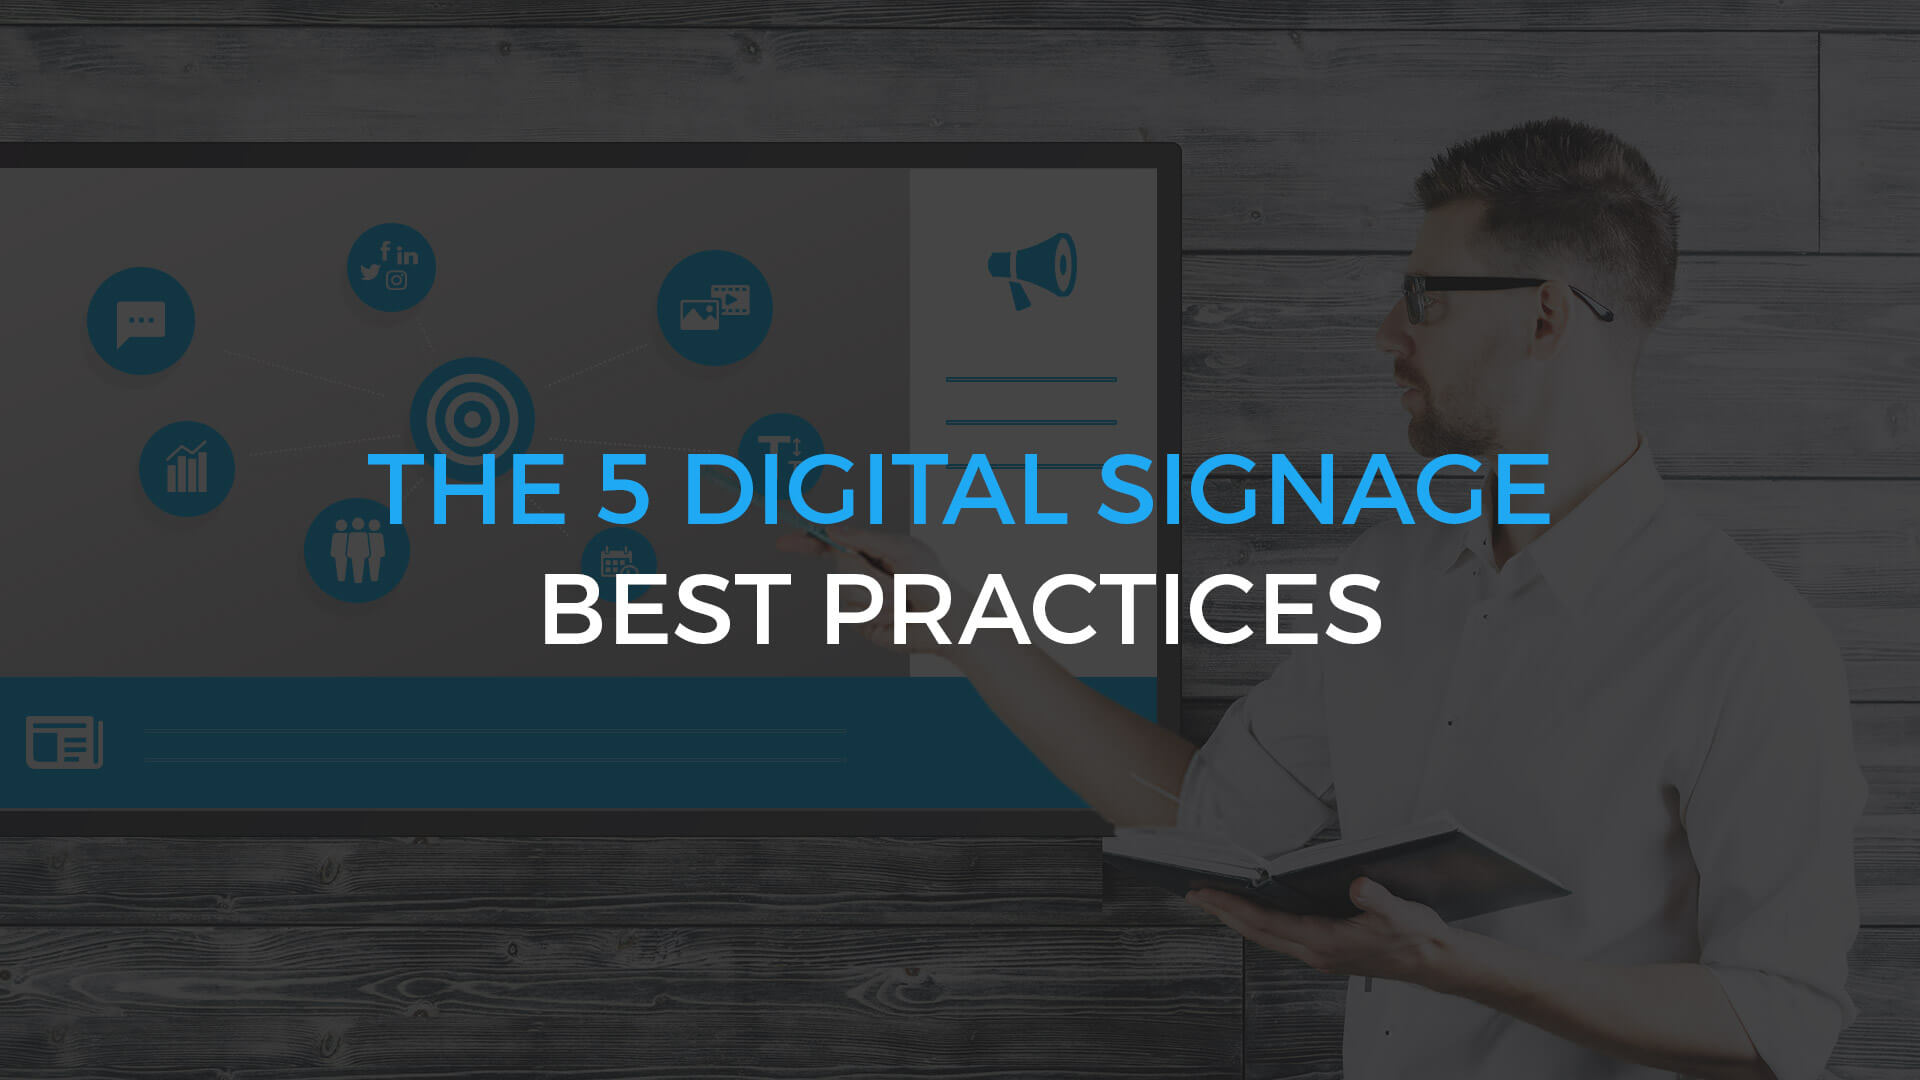 The 5 digital signage best practices